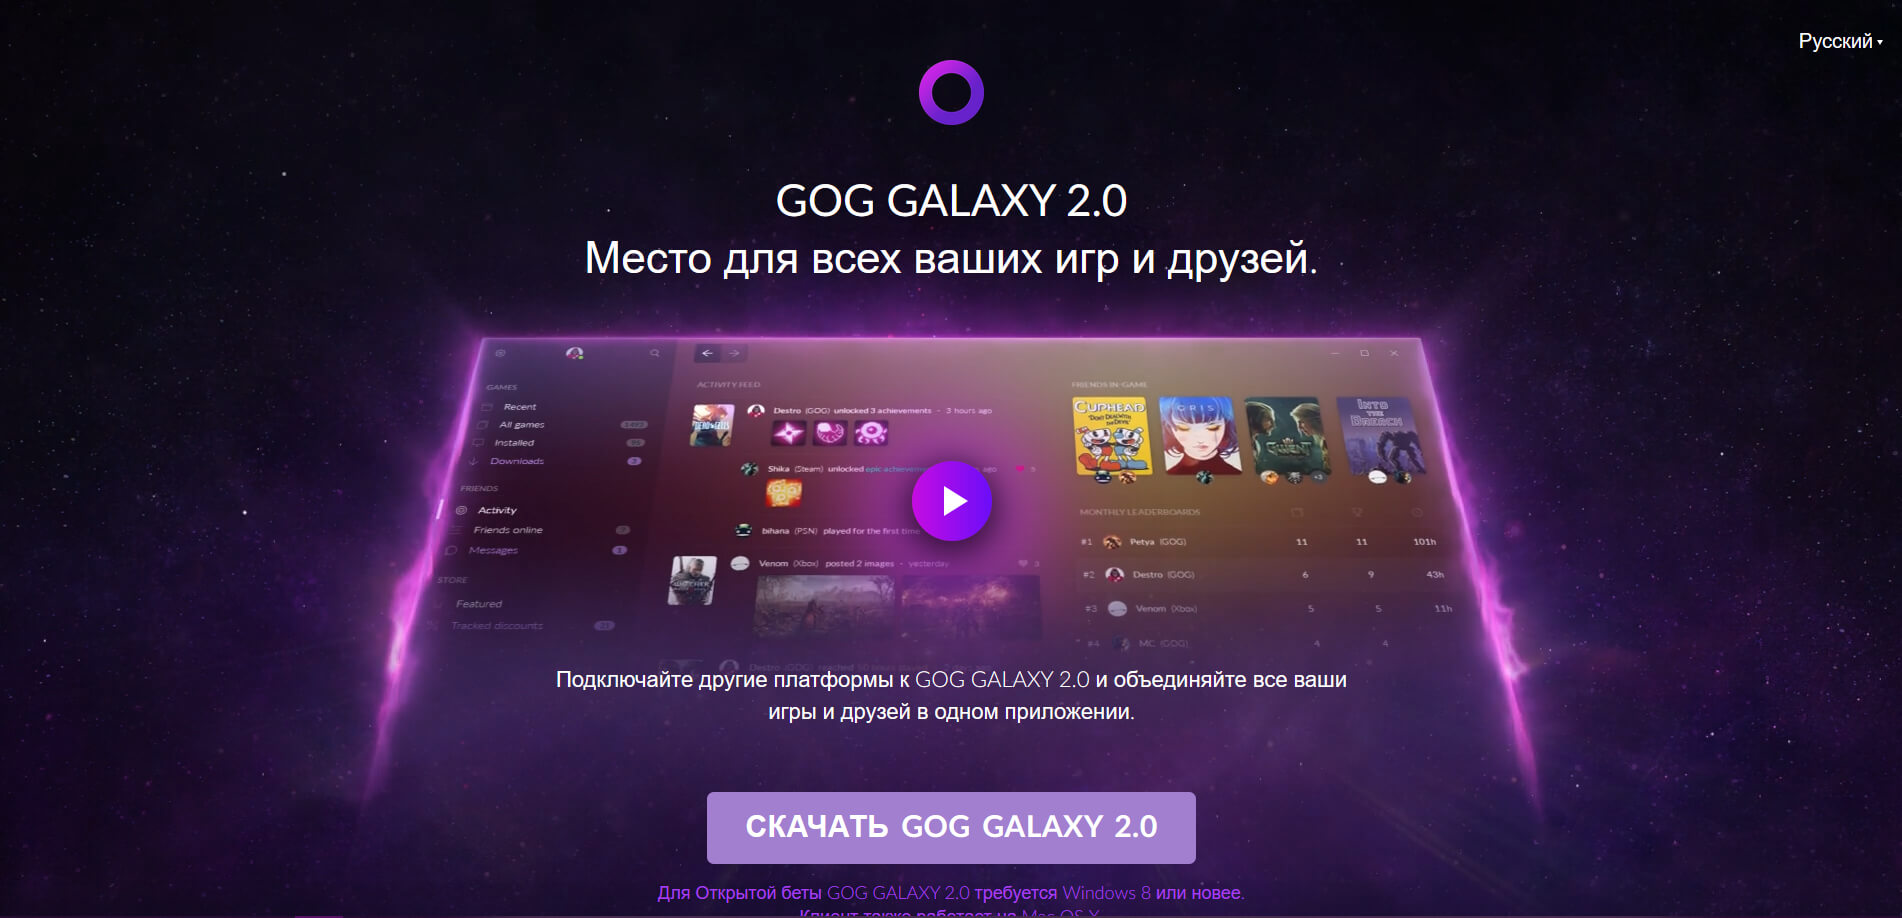 GOG Galaxy 2.0 стал доступен для всех желающих! (фото)